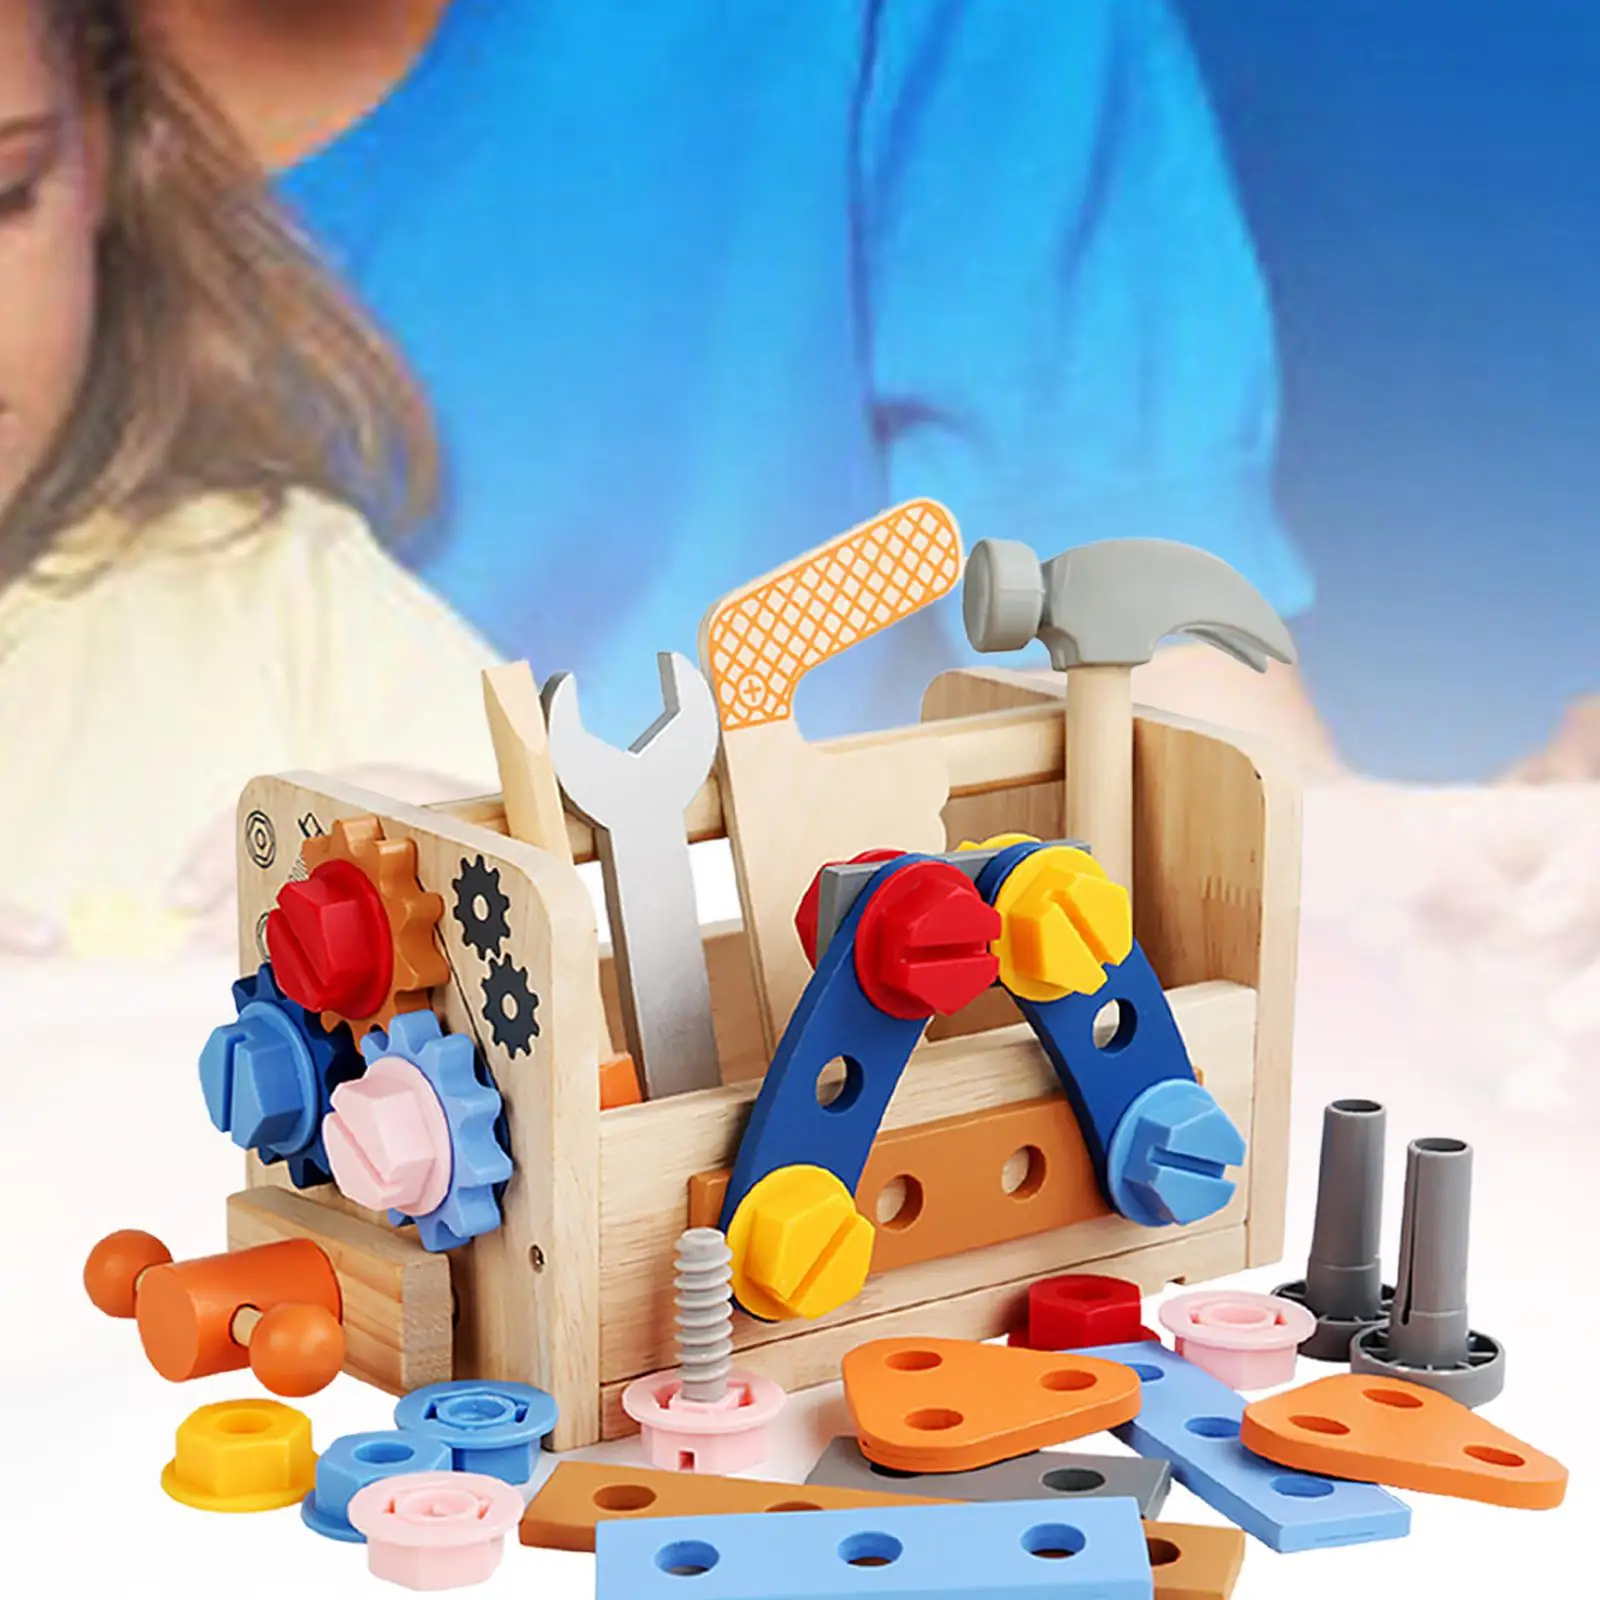 Toolbox Toy Birthday Gift Montessori Educational Gift Gift for Boys Girls